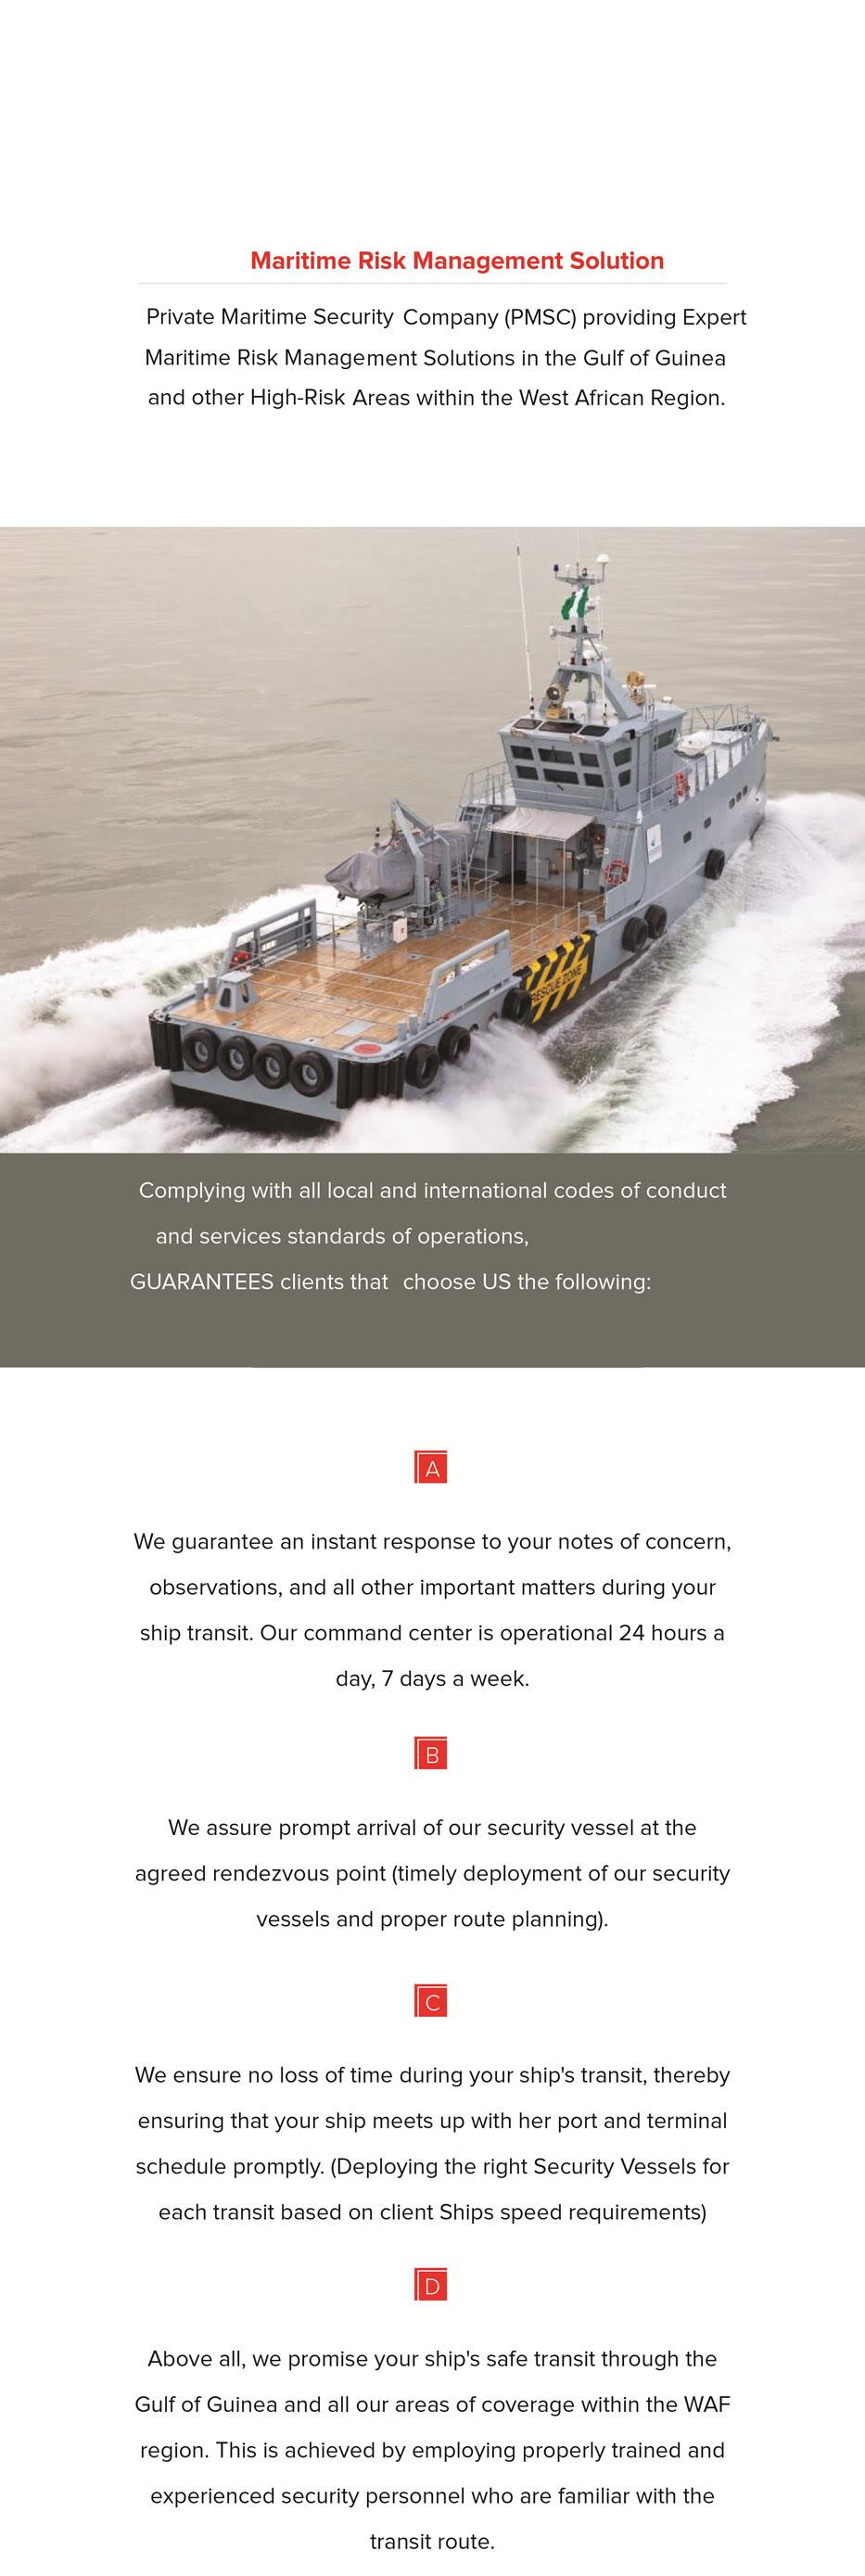 Maritime Risk Management Solution